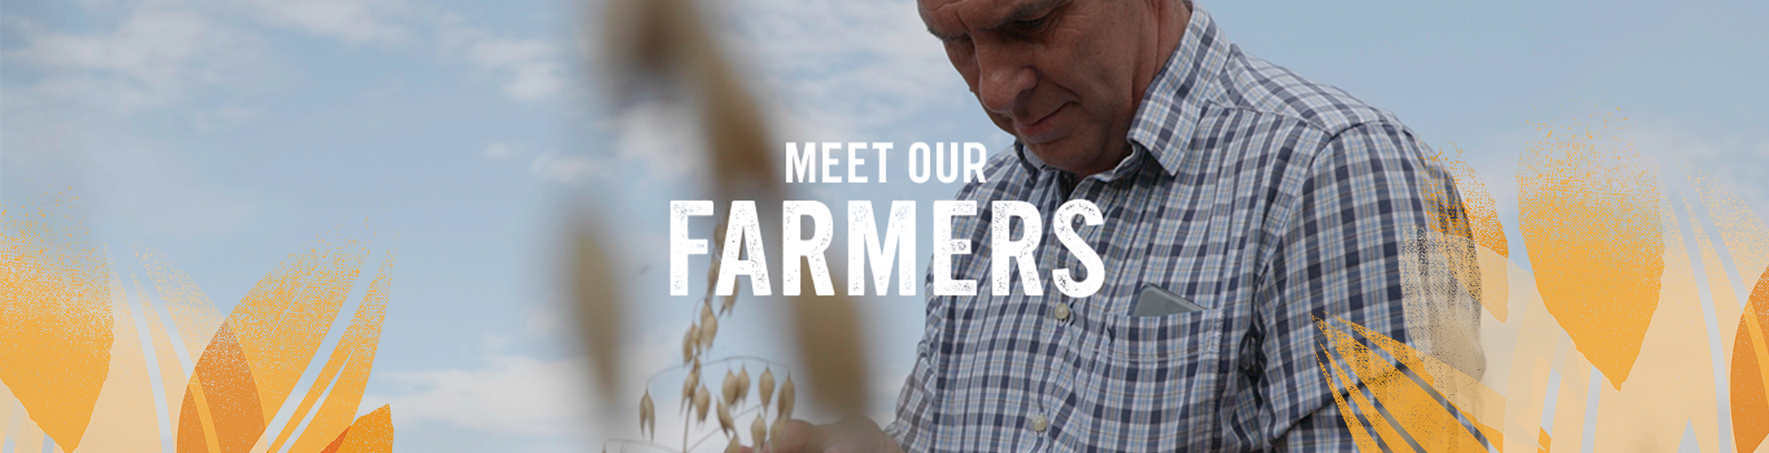 Meet our farmers